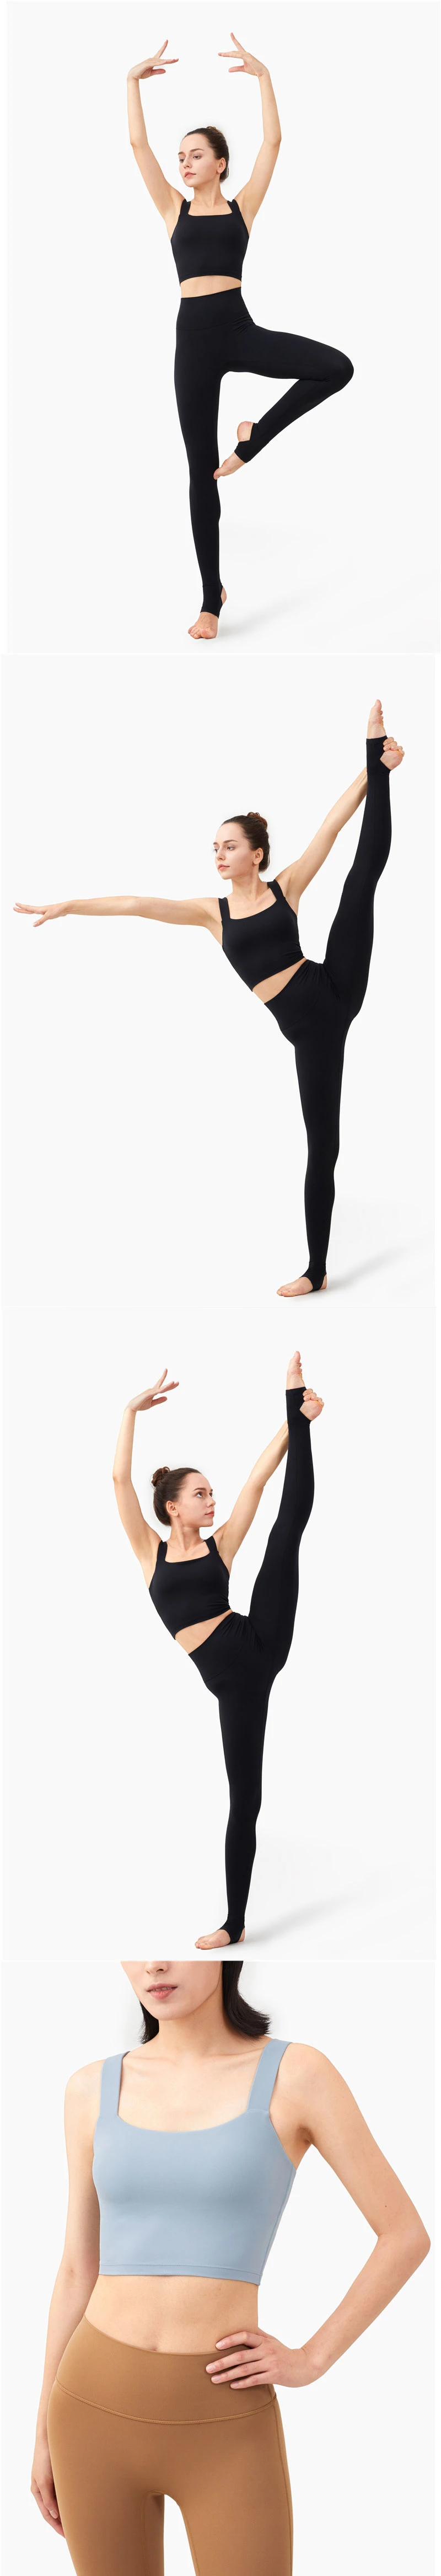 Gym Professional Mesh Back Nylon Spandex Fitness Underwear Women Quick Dry Fashionable Yoga Sports Bra